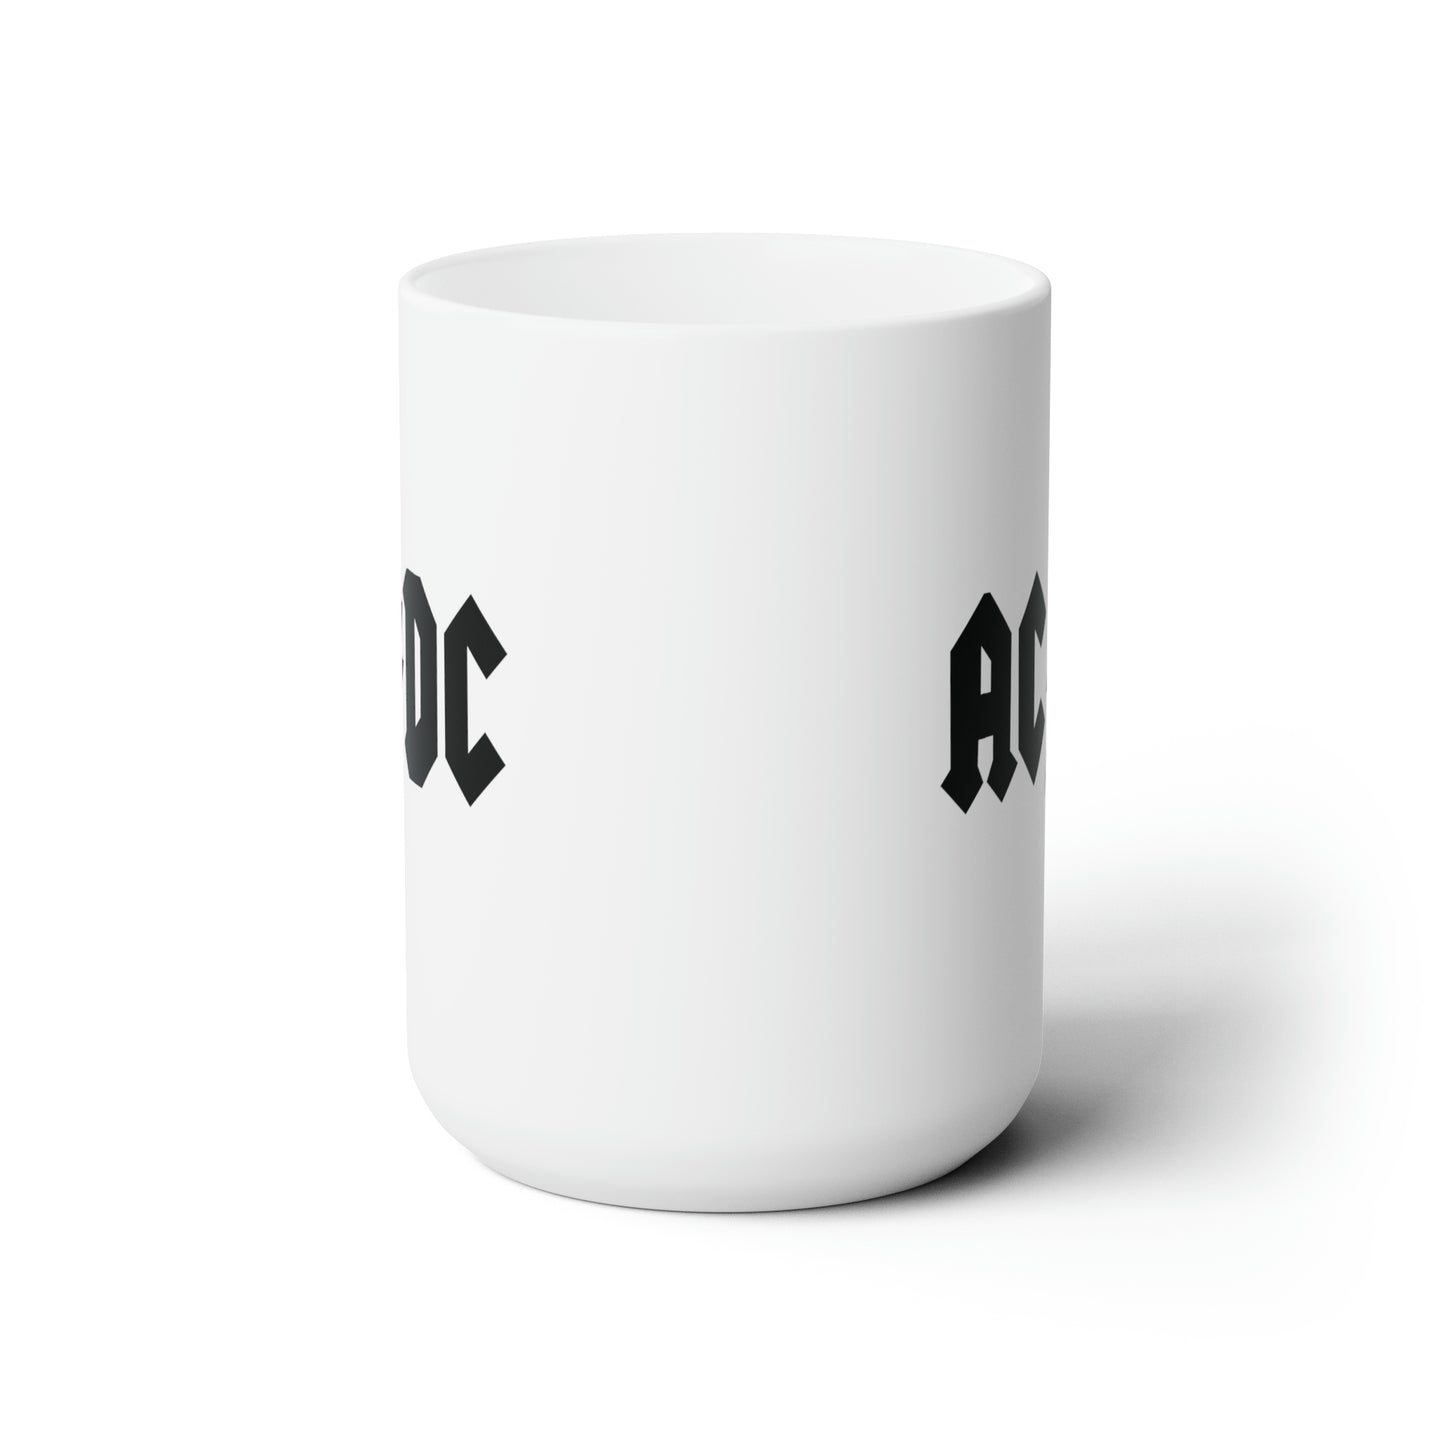 AC/DC Coffee Mug - Double Sided White Ceramic 15oz by TheGlassyLass.com